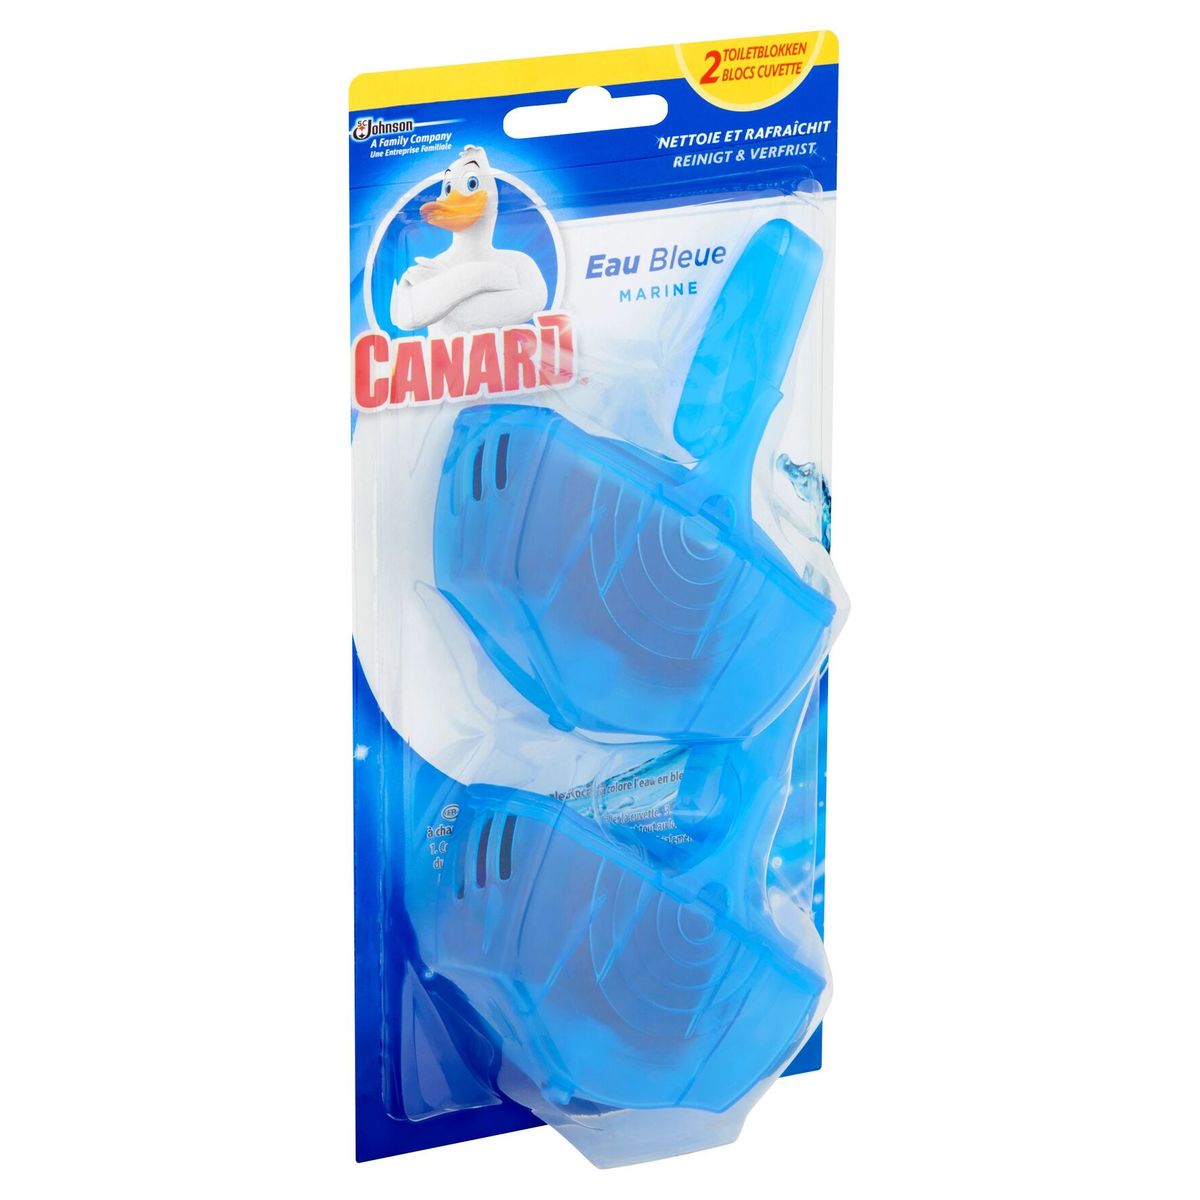 Canard®-Blocs Cuvette Eau Bleue Marine- 2 x 40 g